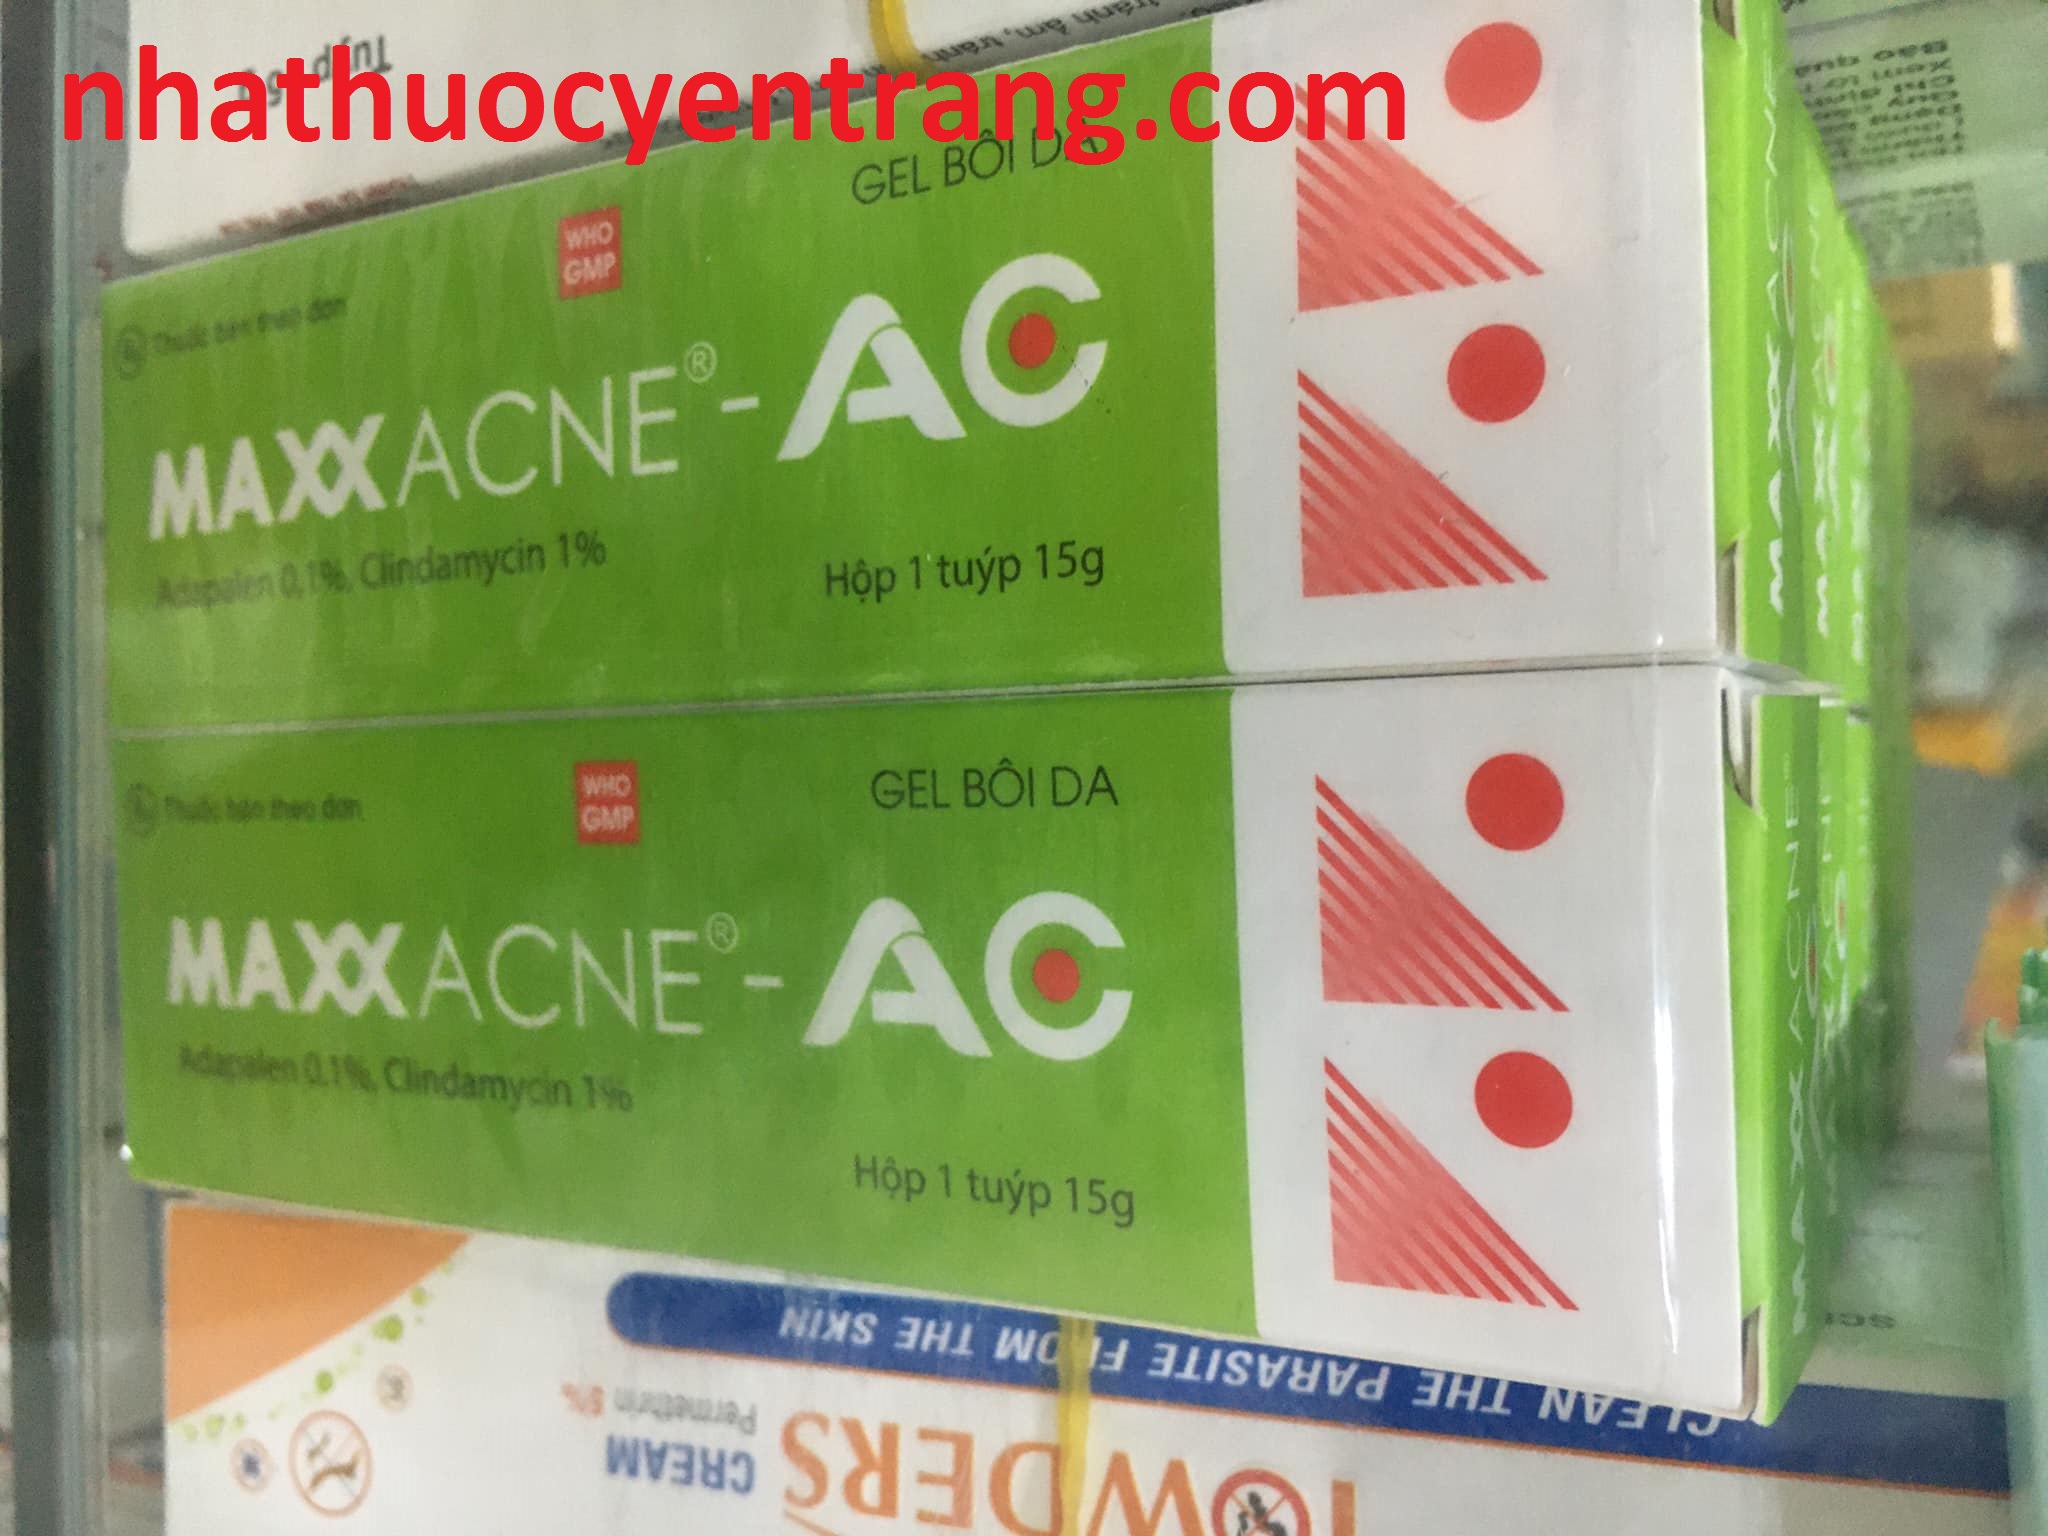 Maxx Acne - AC 15g